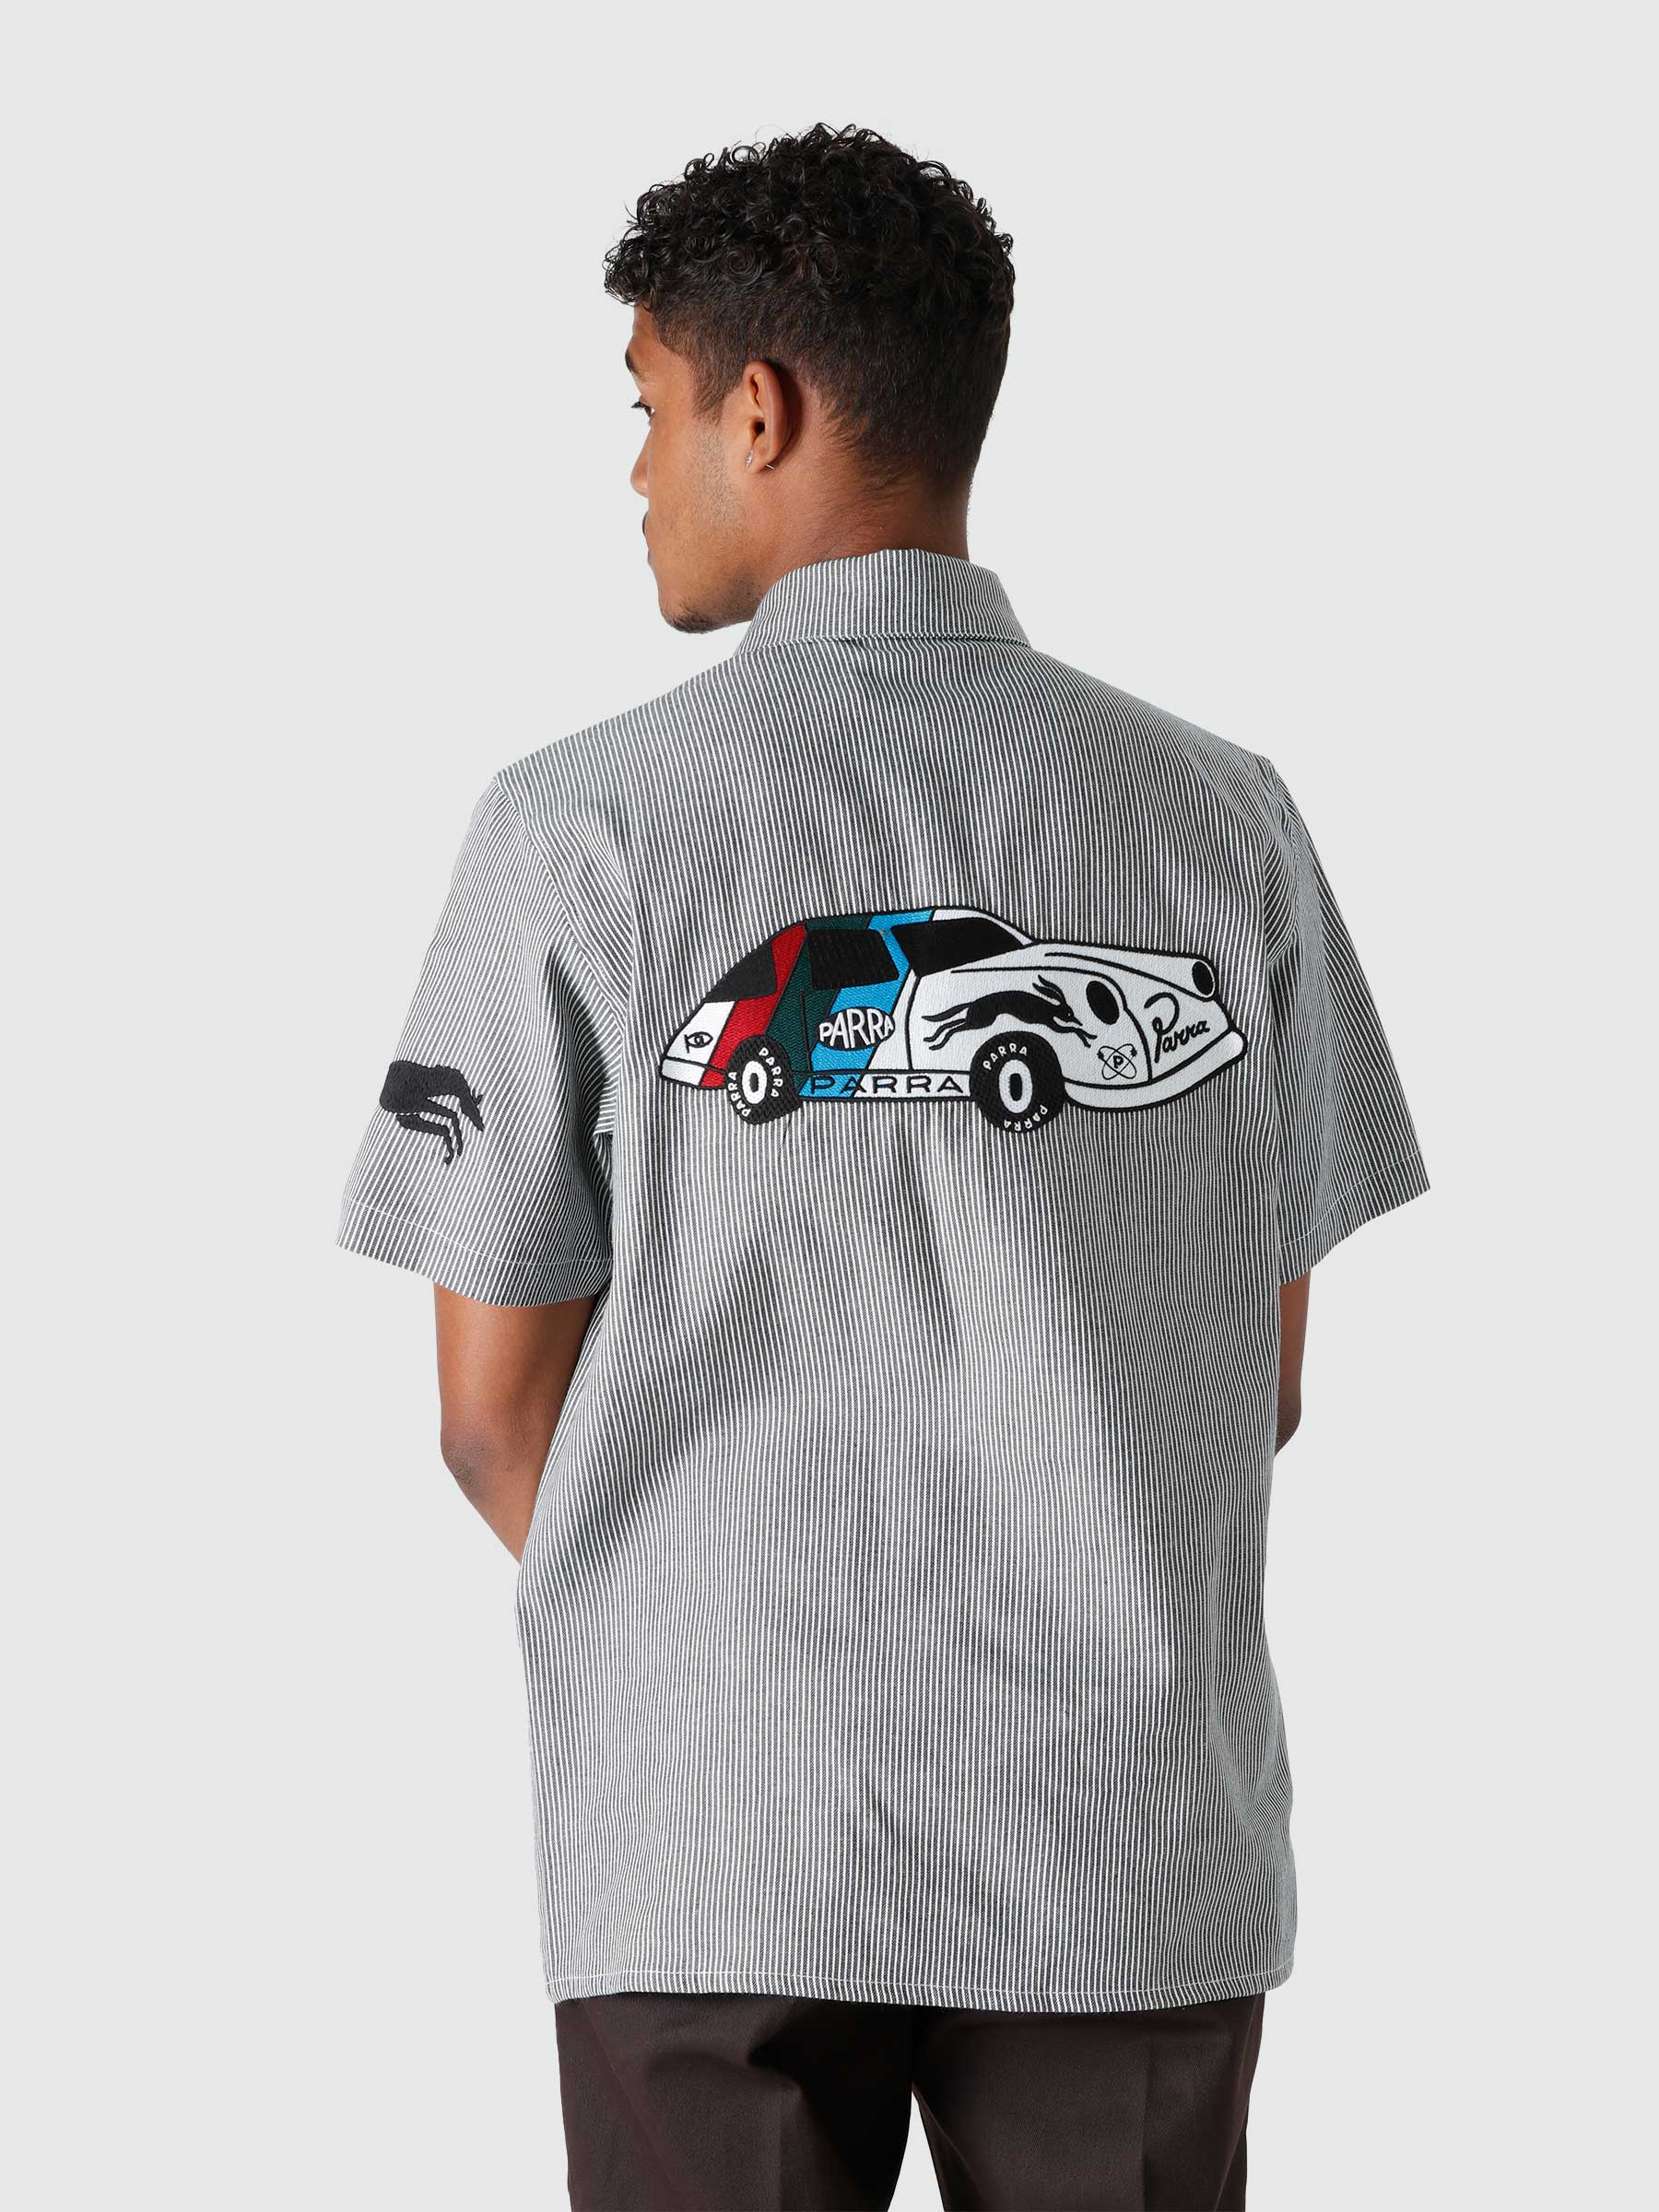 Parra Racing Team Mechanic Short Sleeve Shirt Black 47345